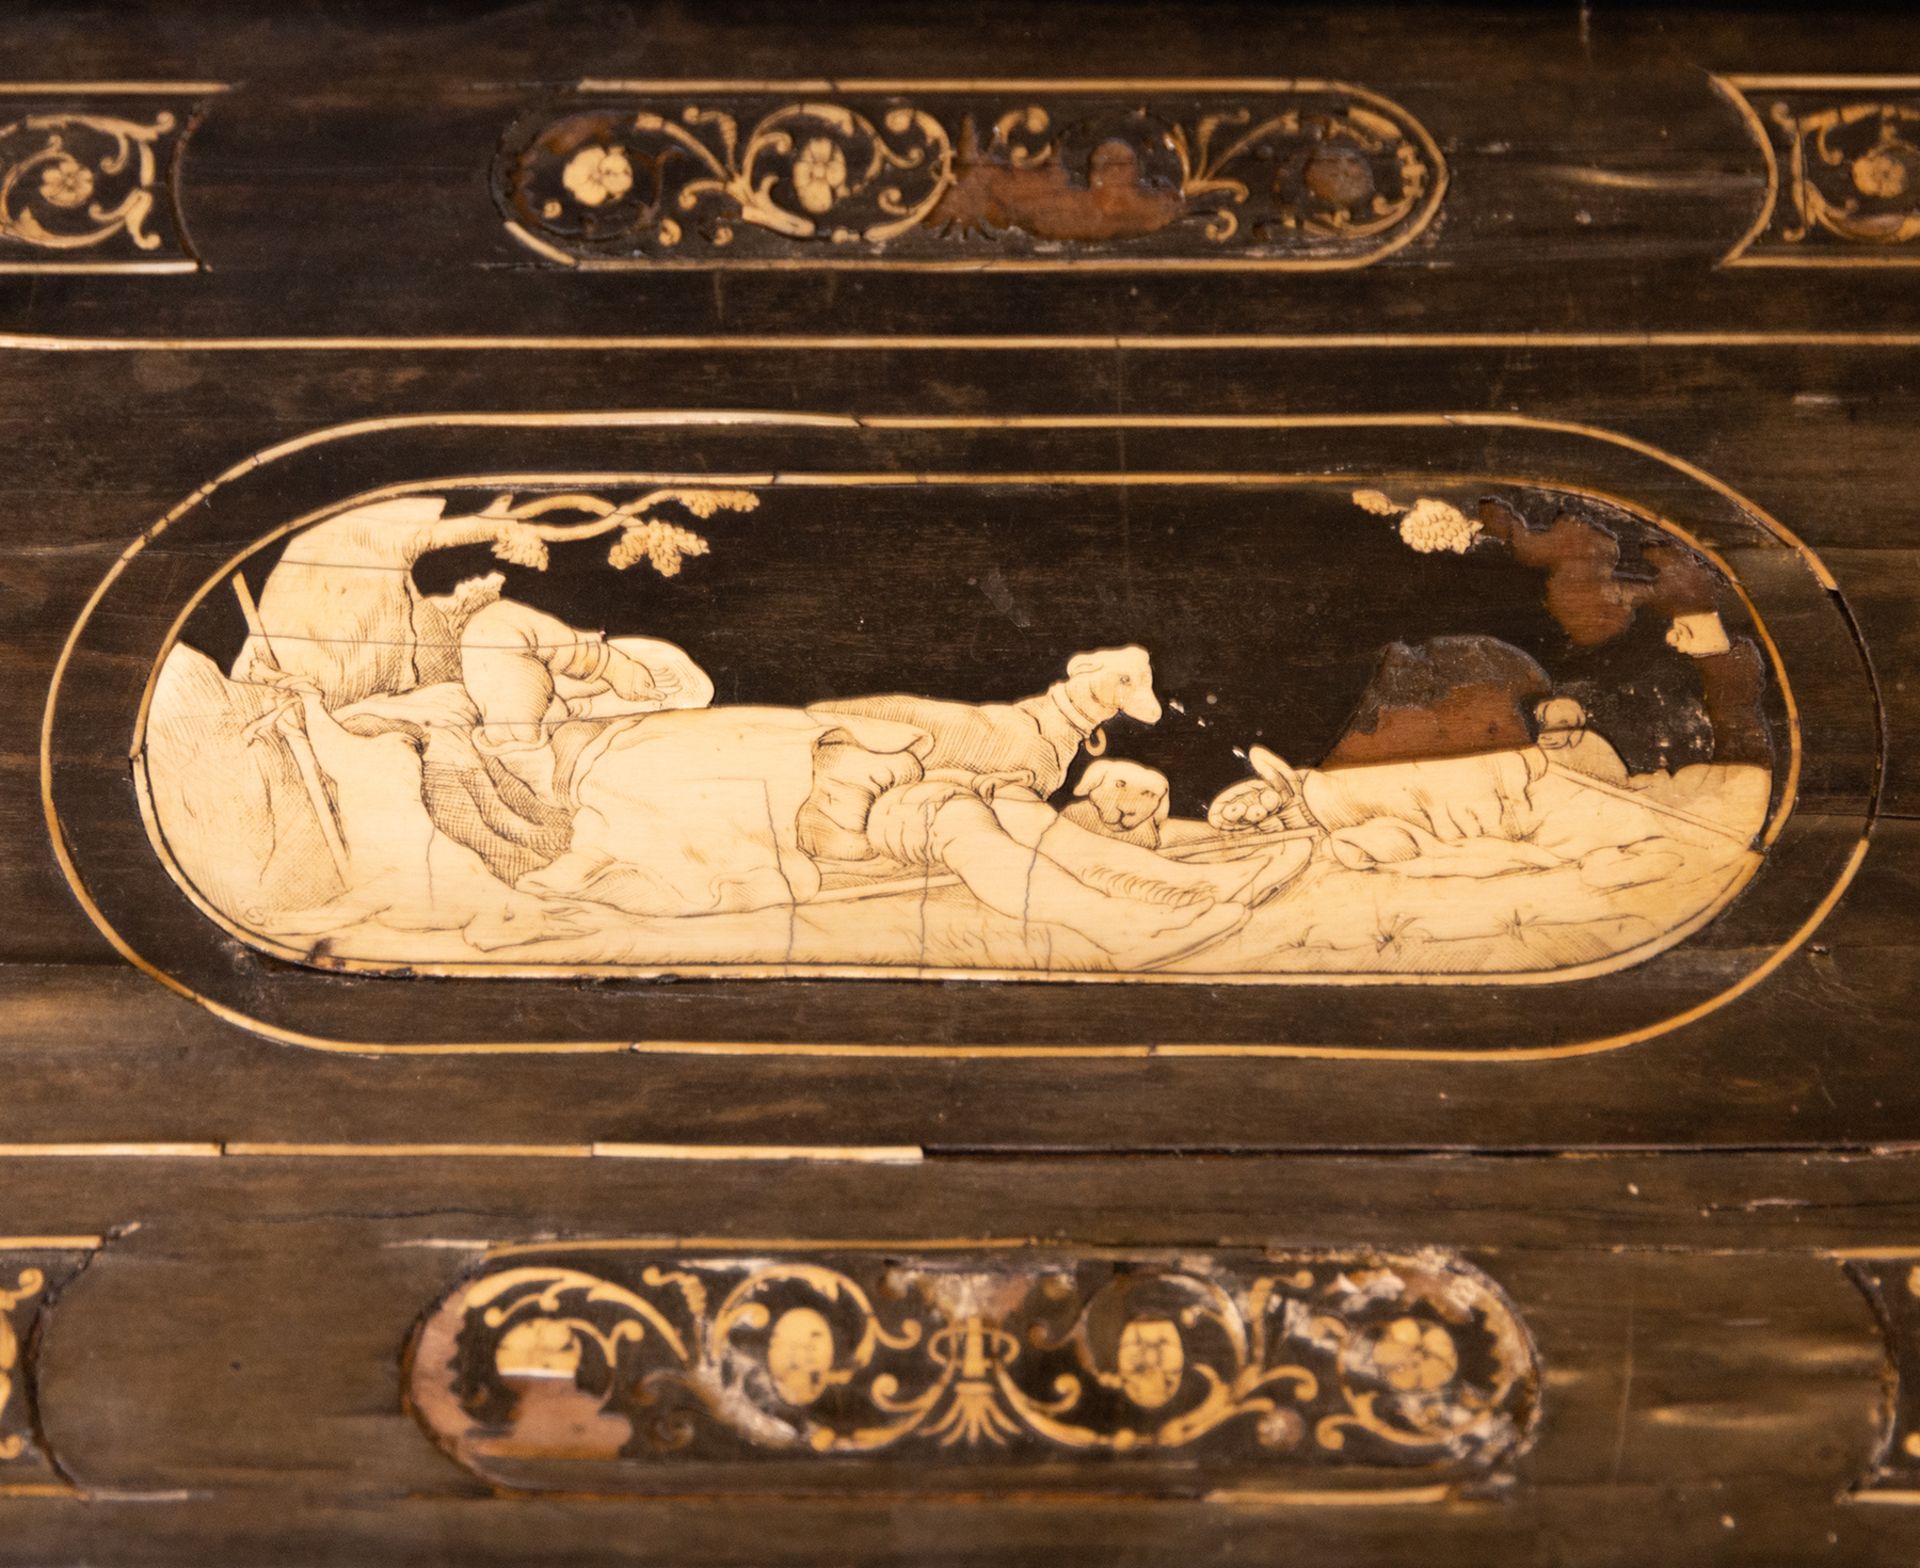 Exquisite Florentine Desk in ebony and bone inlay, signed Joseph Bertin(?)/Negt. de furniture ébene, - Image 6 of 9